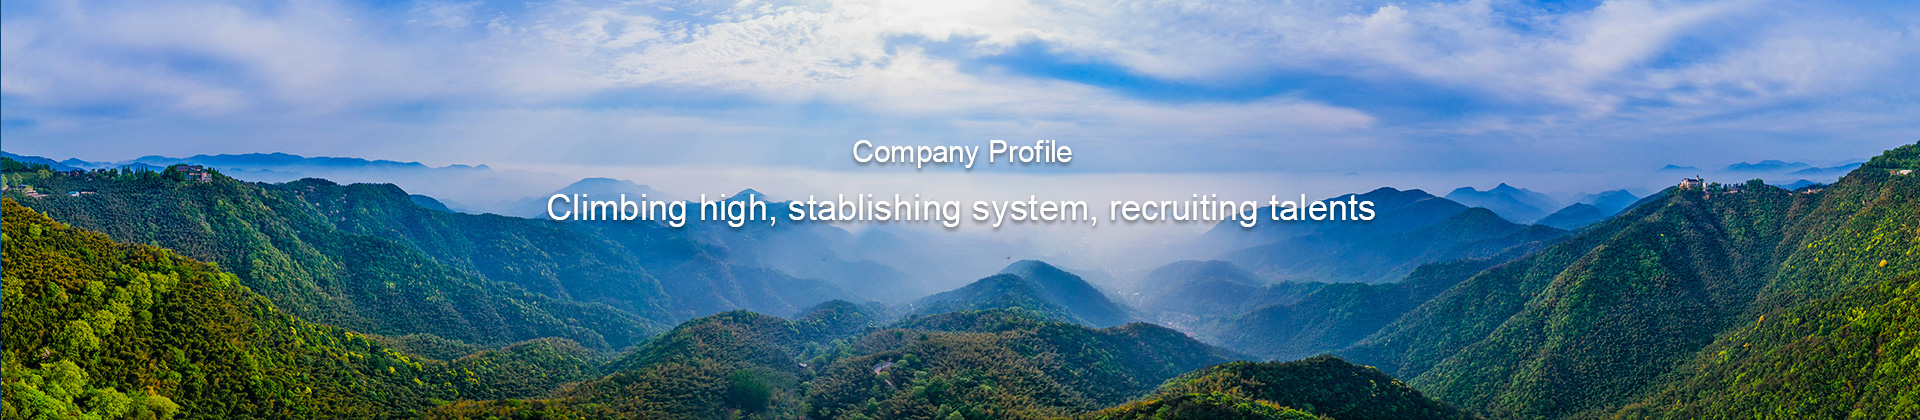  Company Profile